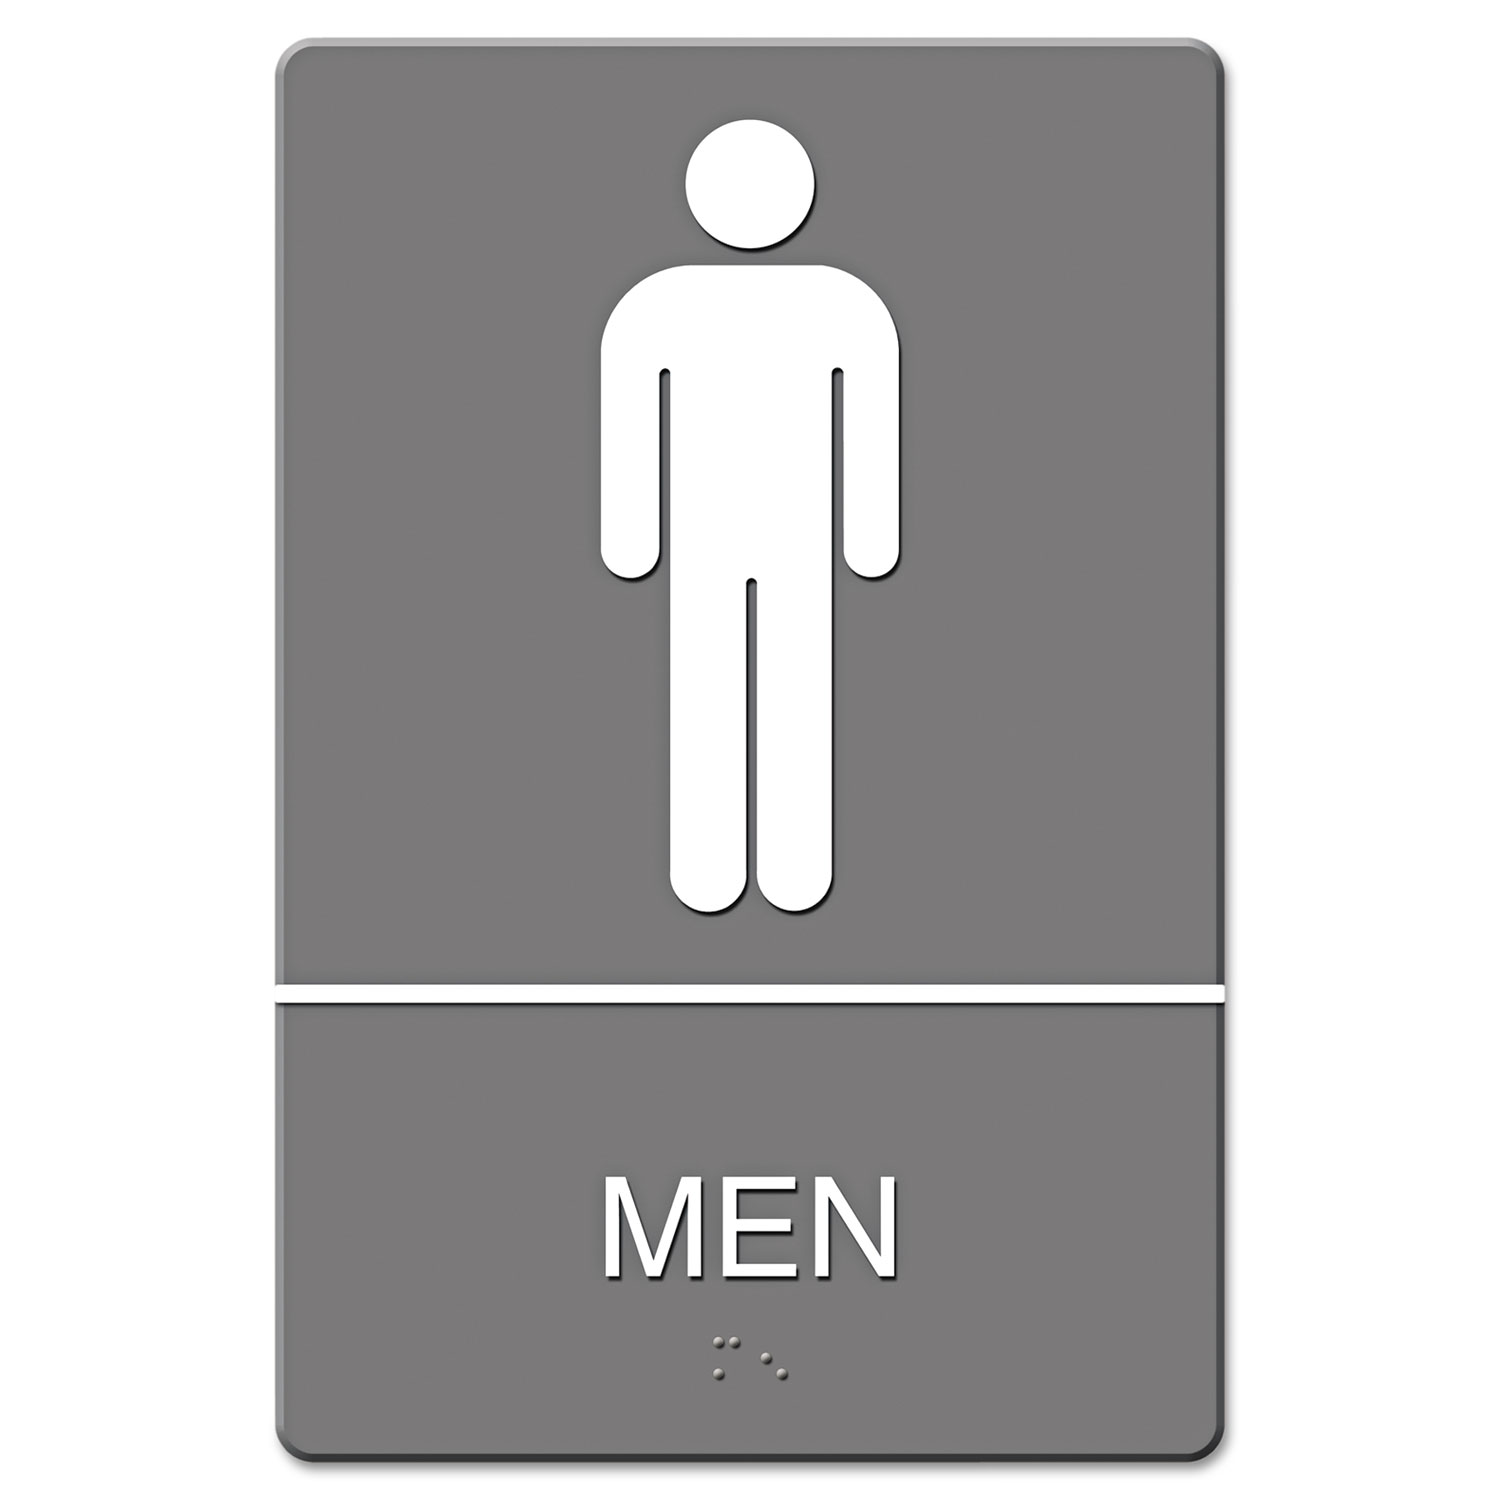  Headline Sign 4817 ADA Sign, Men Restroom Symbol w/Tactile Graphic, Molded Plastic, 6 x 9, Gray (USS4817) 